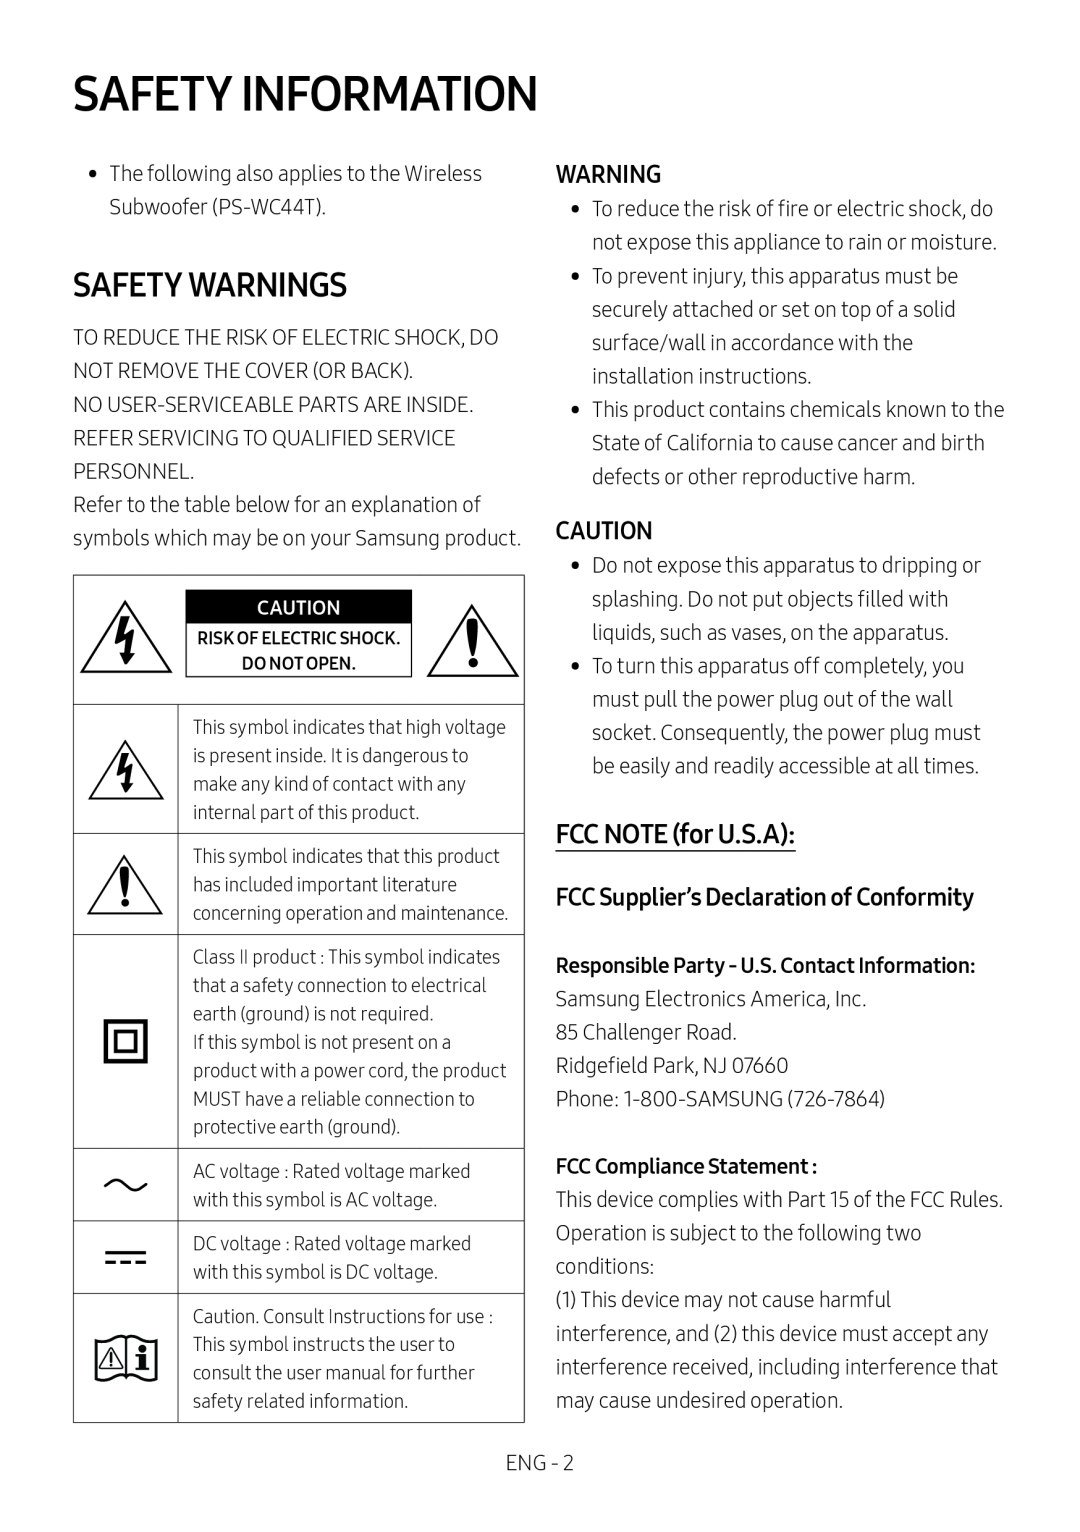 SAFETY WARNINGS Standard HW-C43M